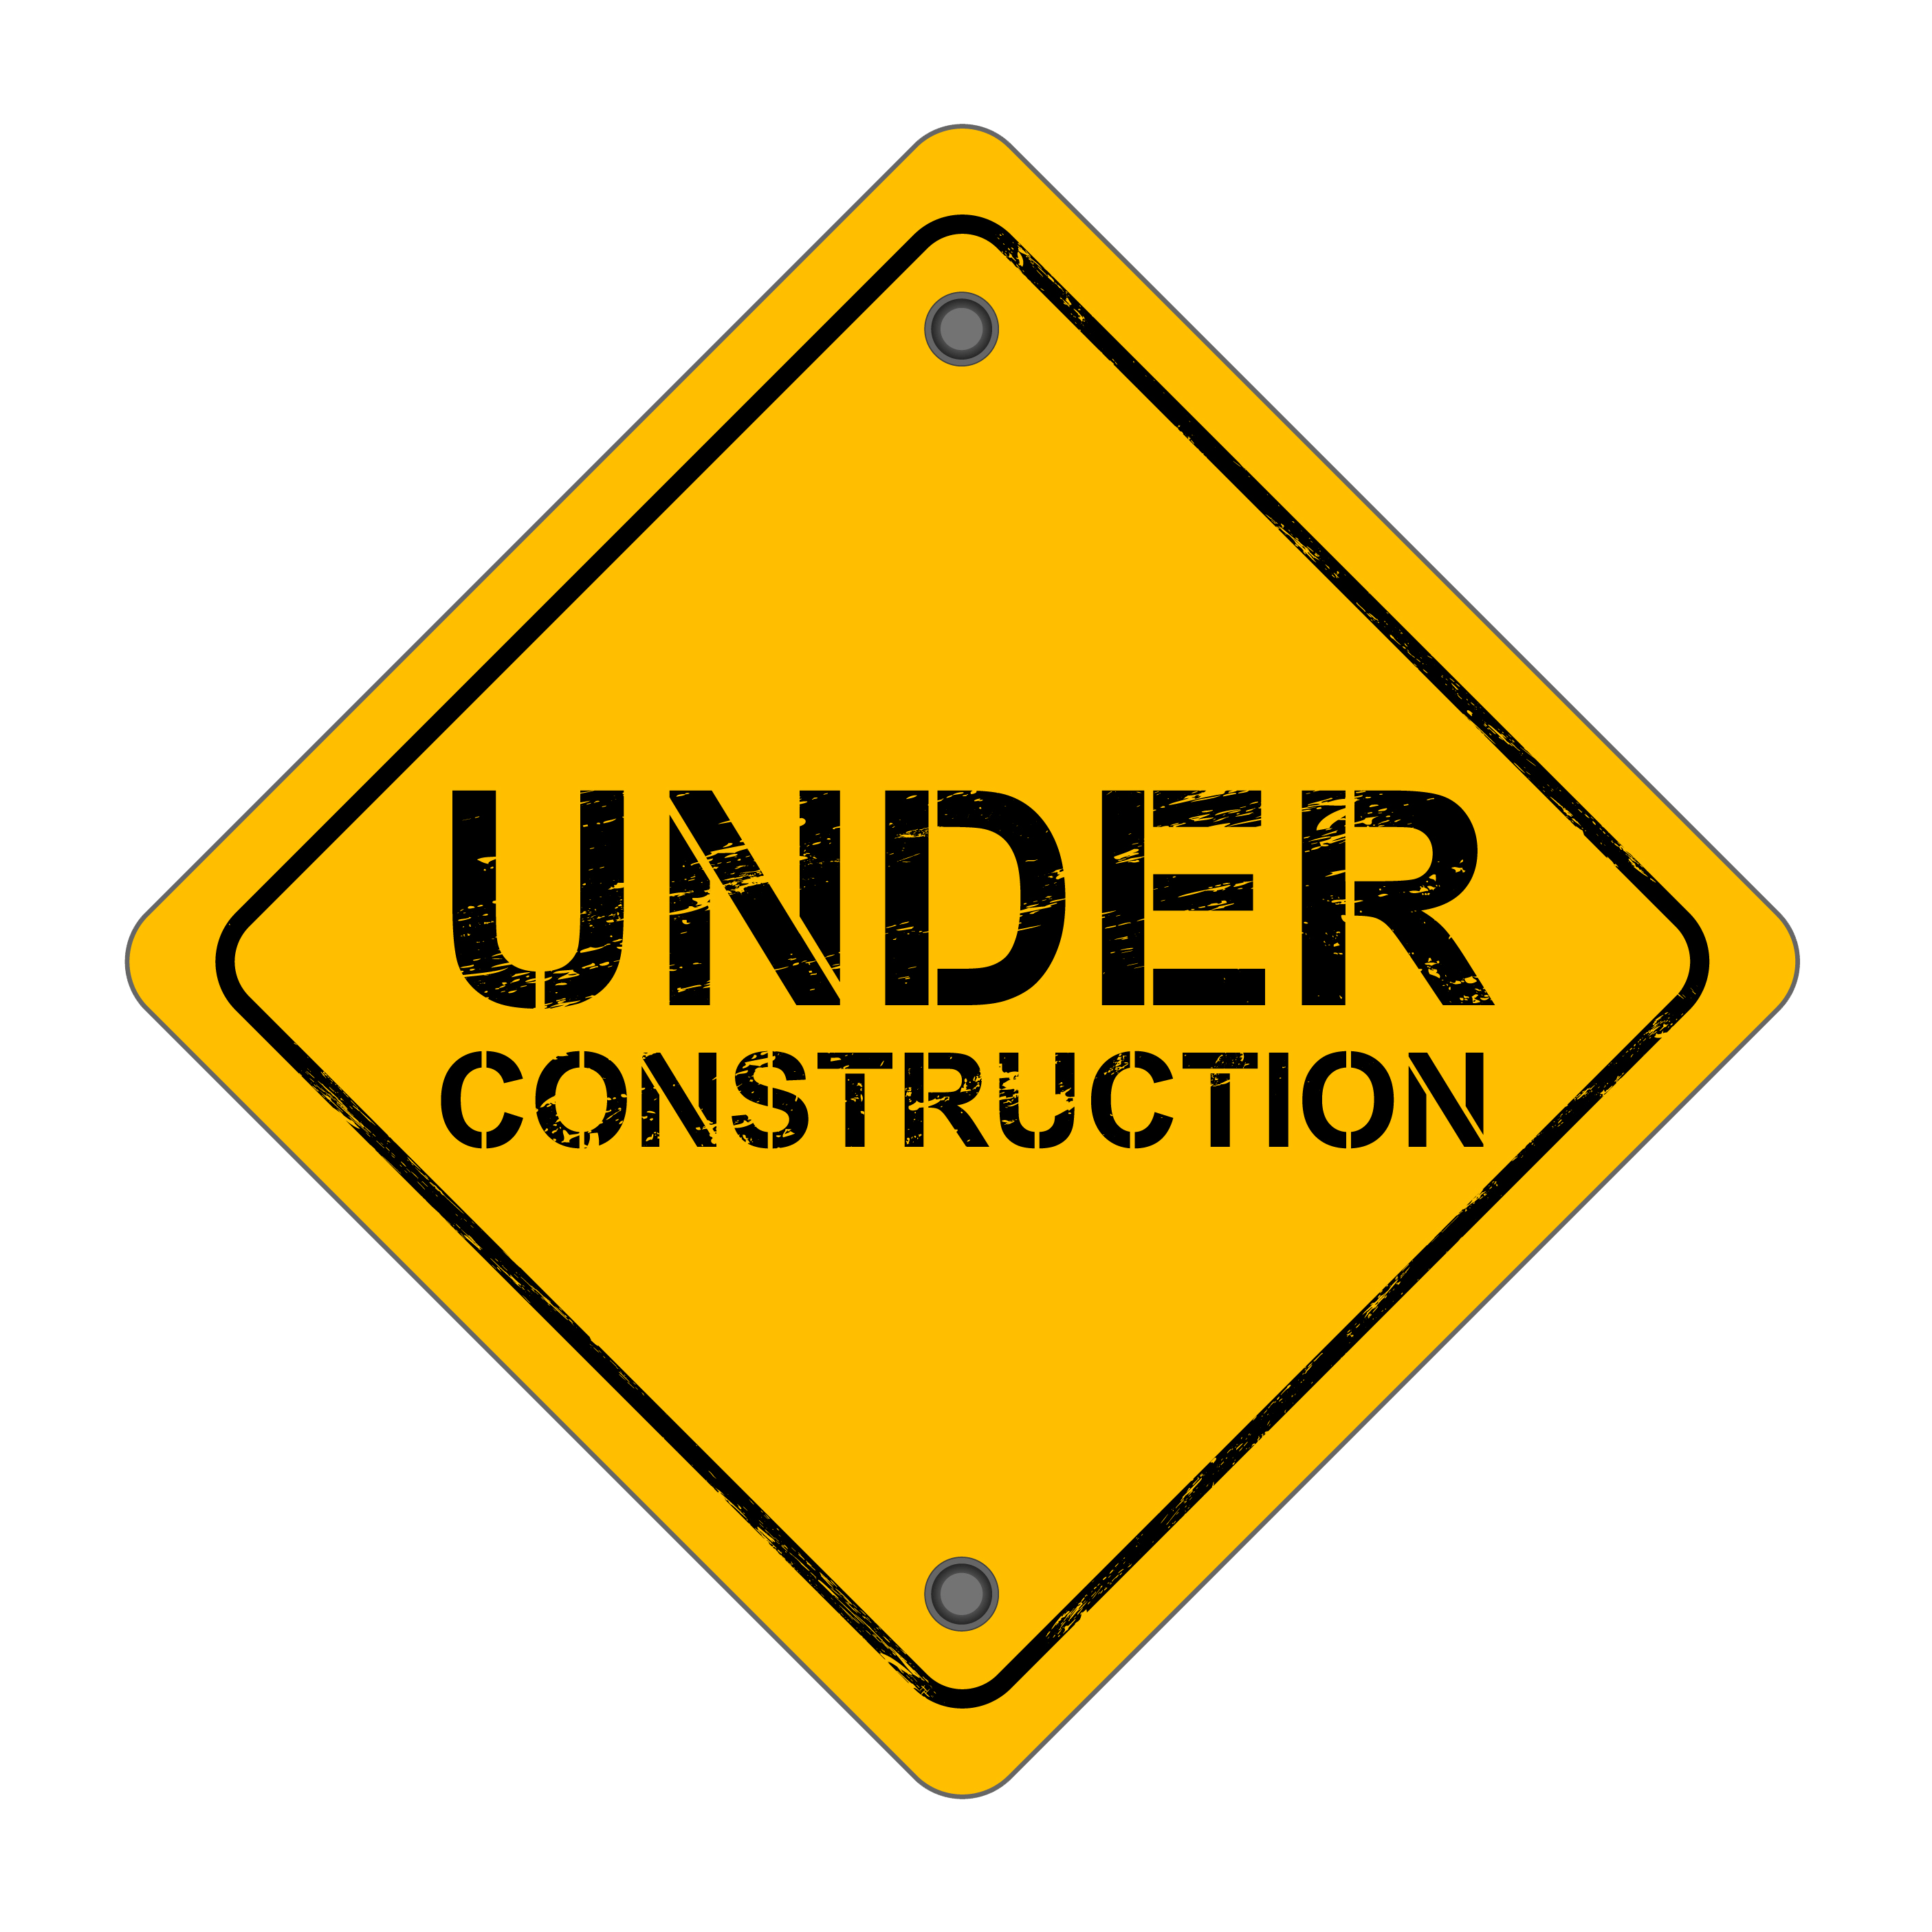 Under Construction Logo - Under construction PNG image label free download